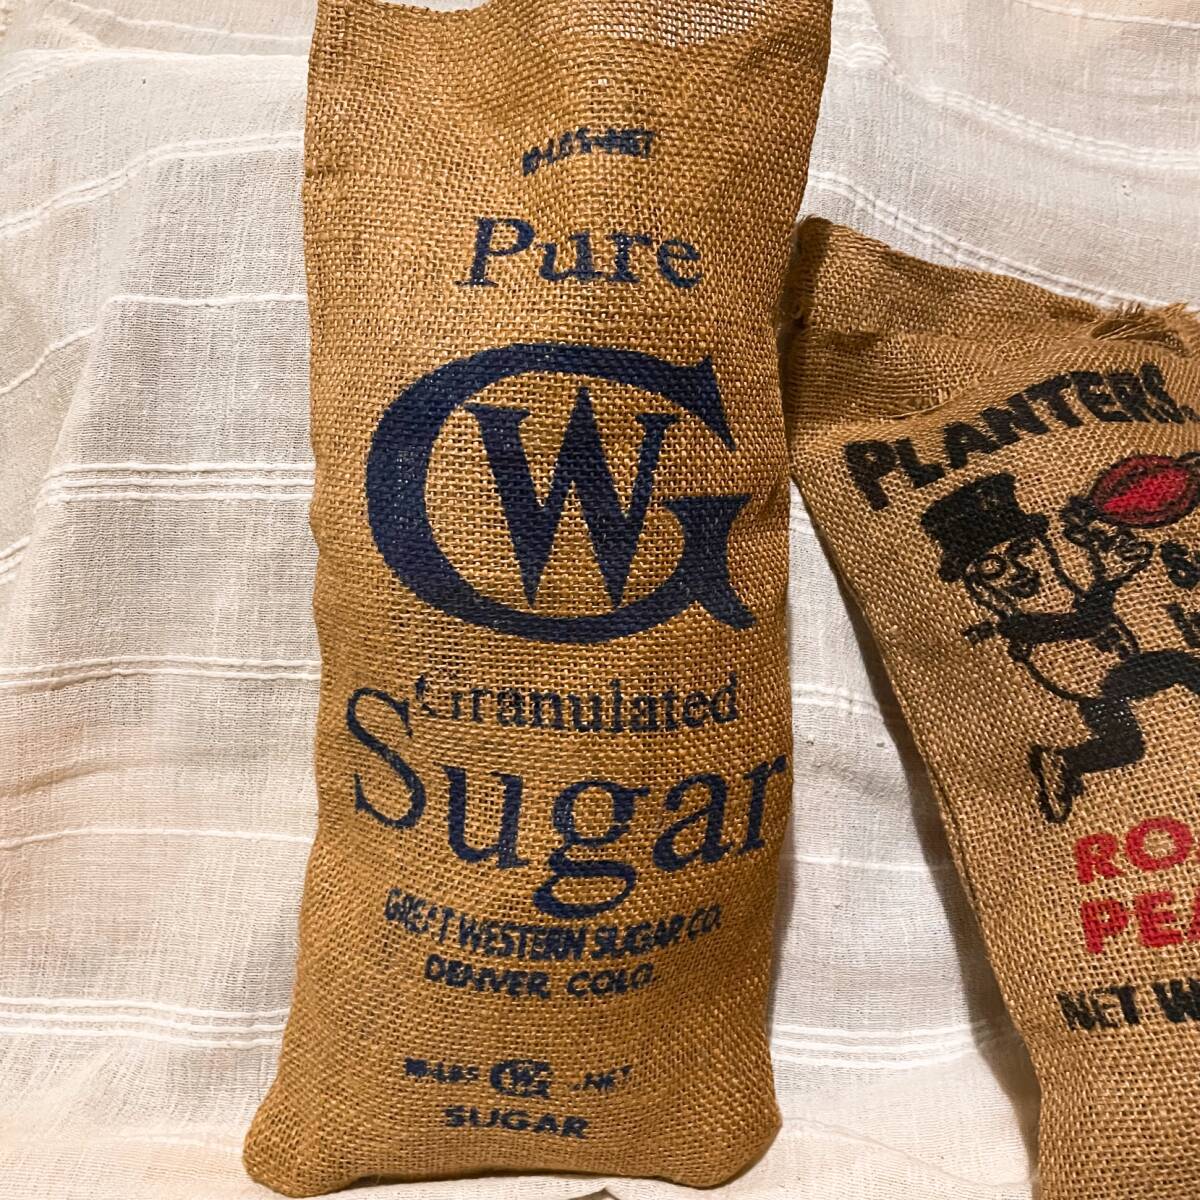 *SALE! Jute Bag jute сумка Mr.PEANUTS Sugar 2 шт. комплект! Mr. Peanuts смешанные товары Ame игрушка интерьер Vintage античный 